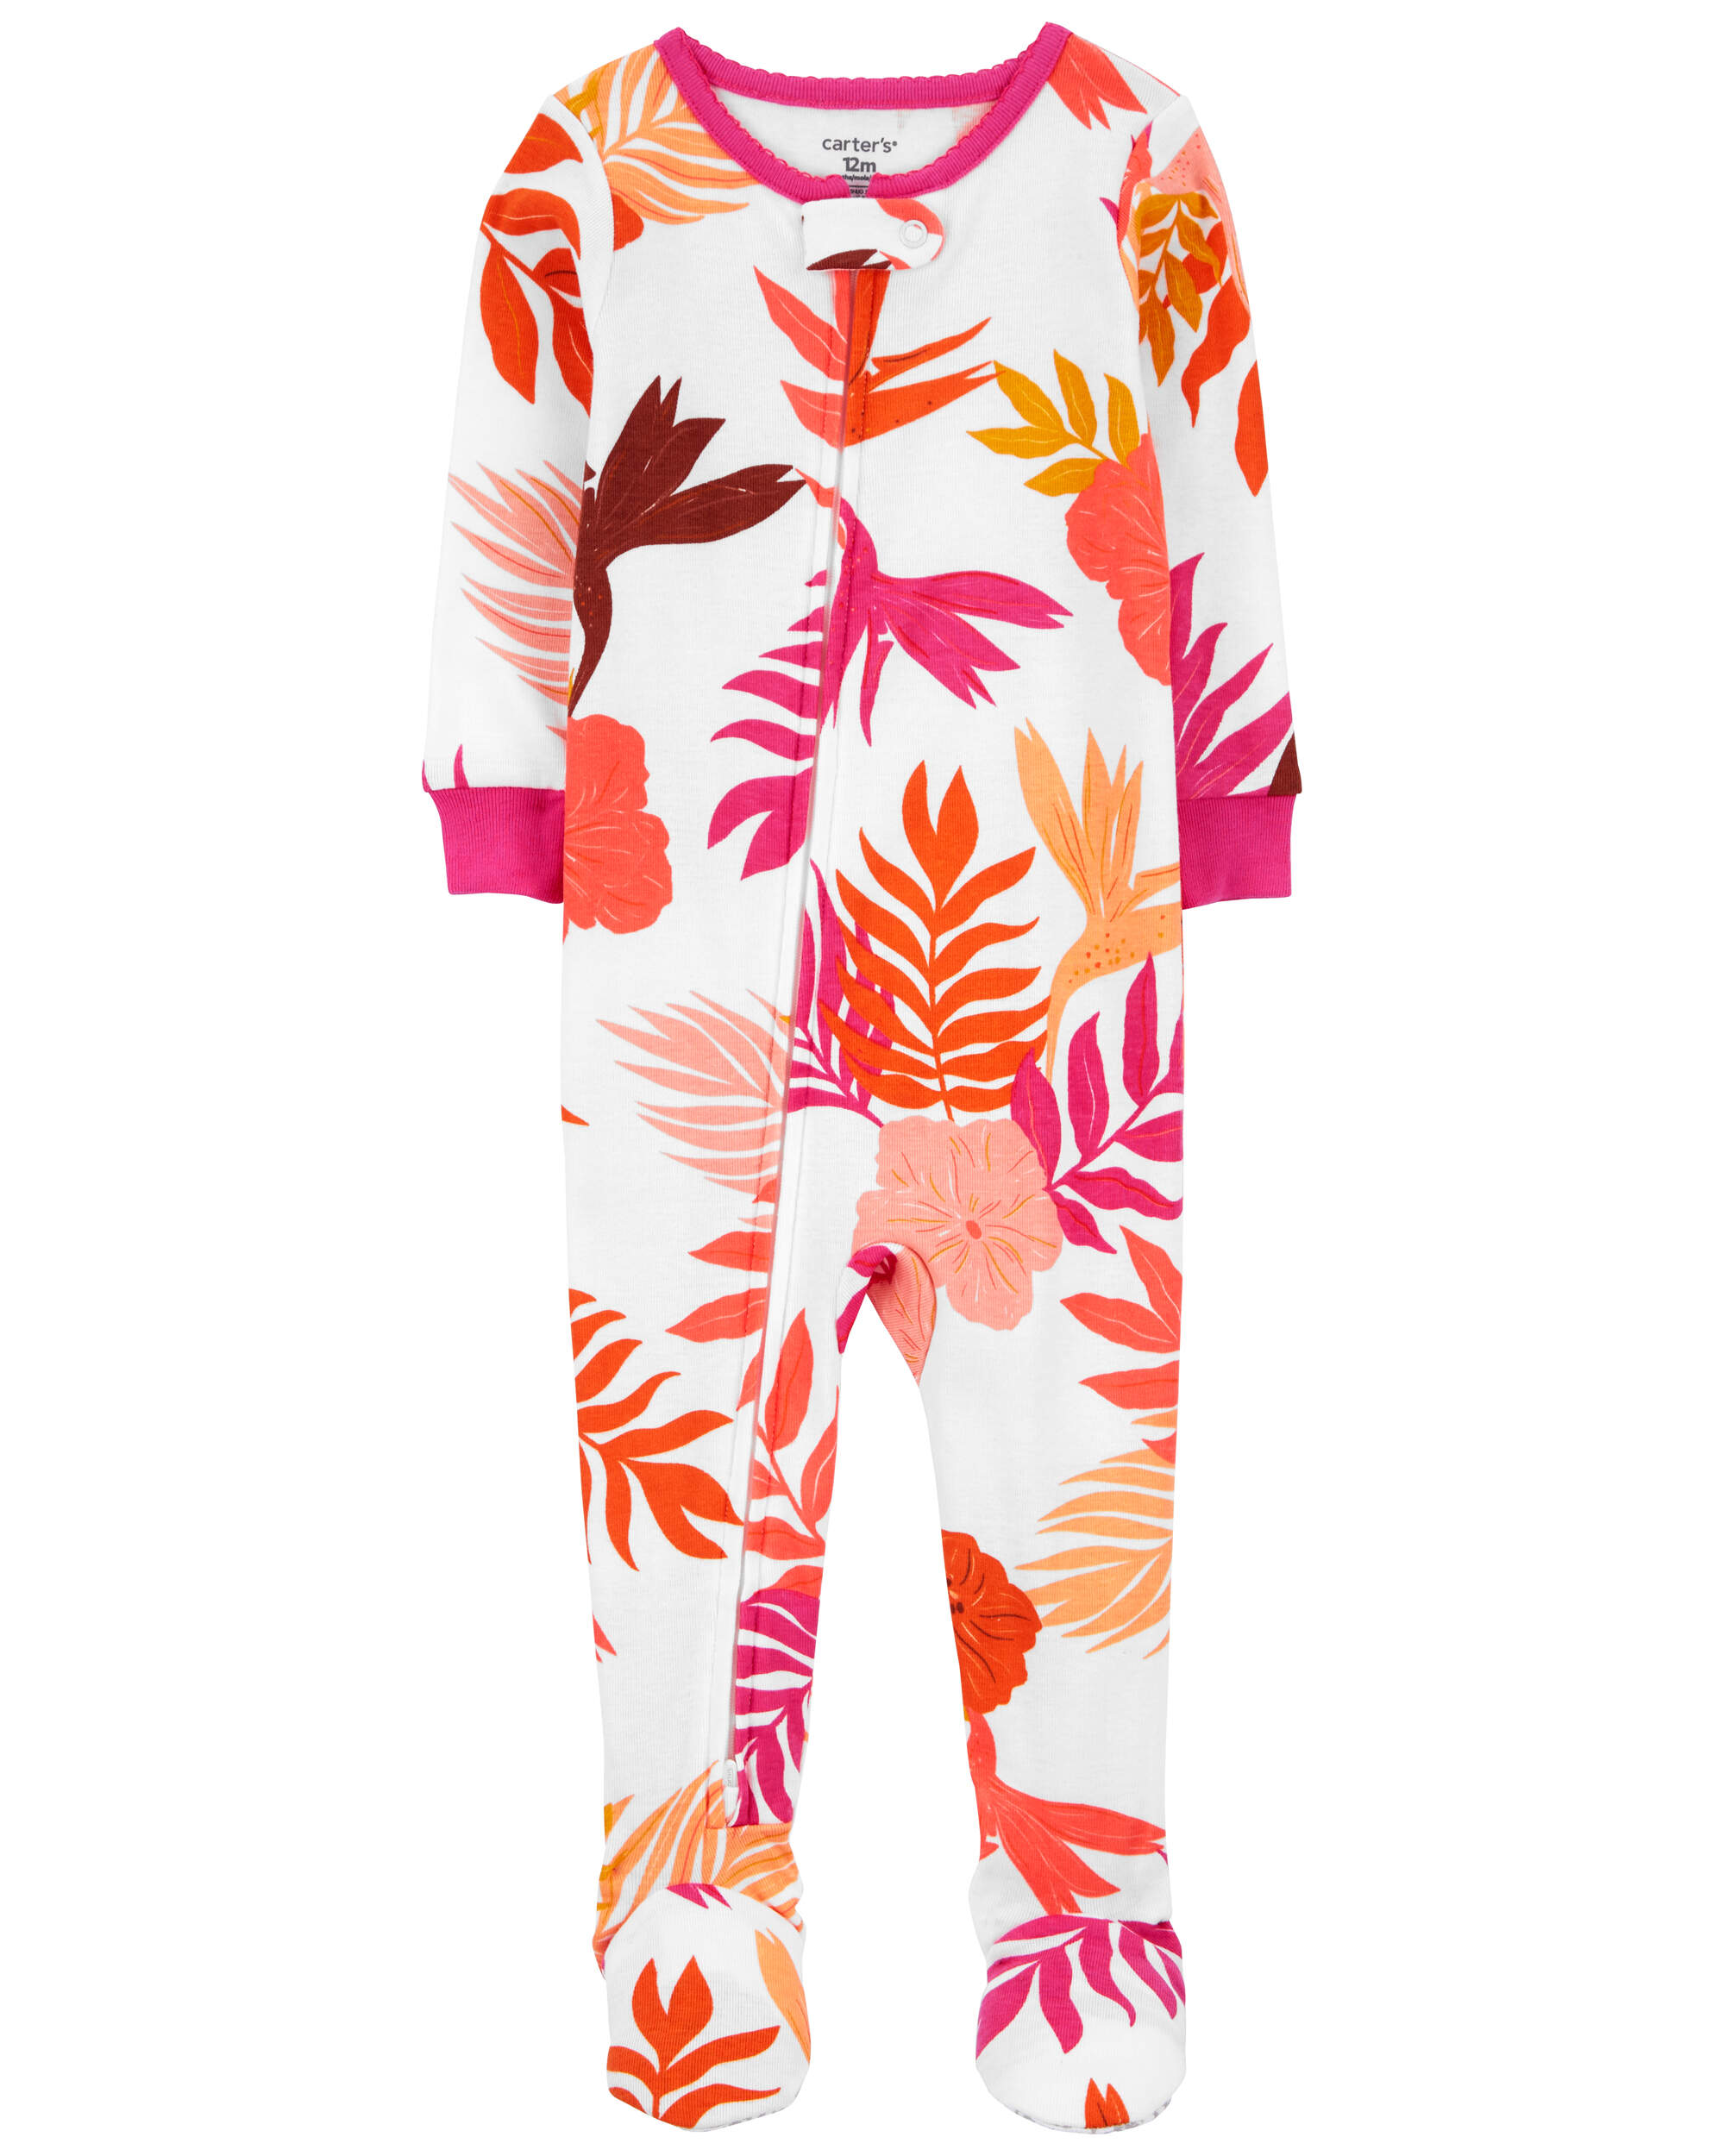 Baby 1-Piece Floral 100% Snug Fit Cotton Footie Pyjamas